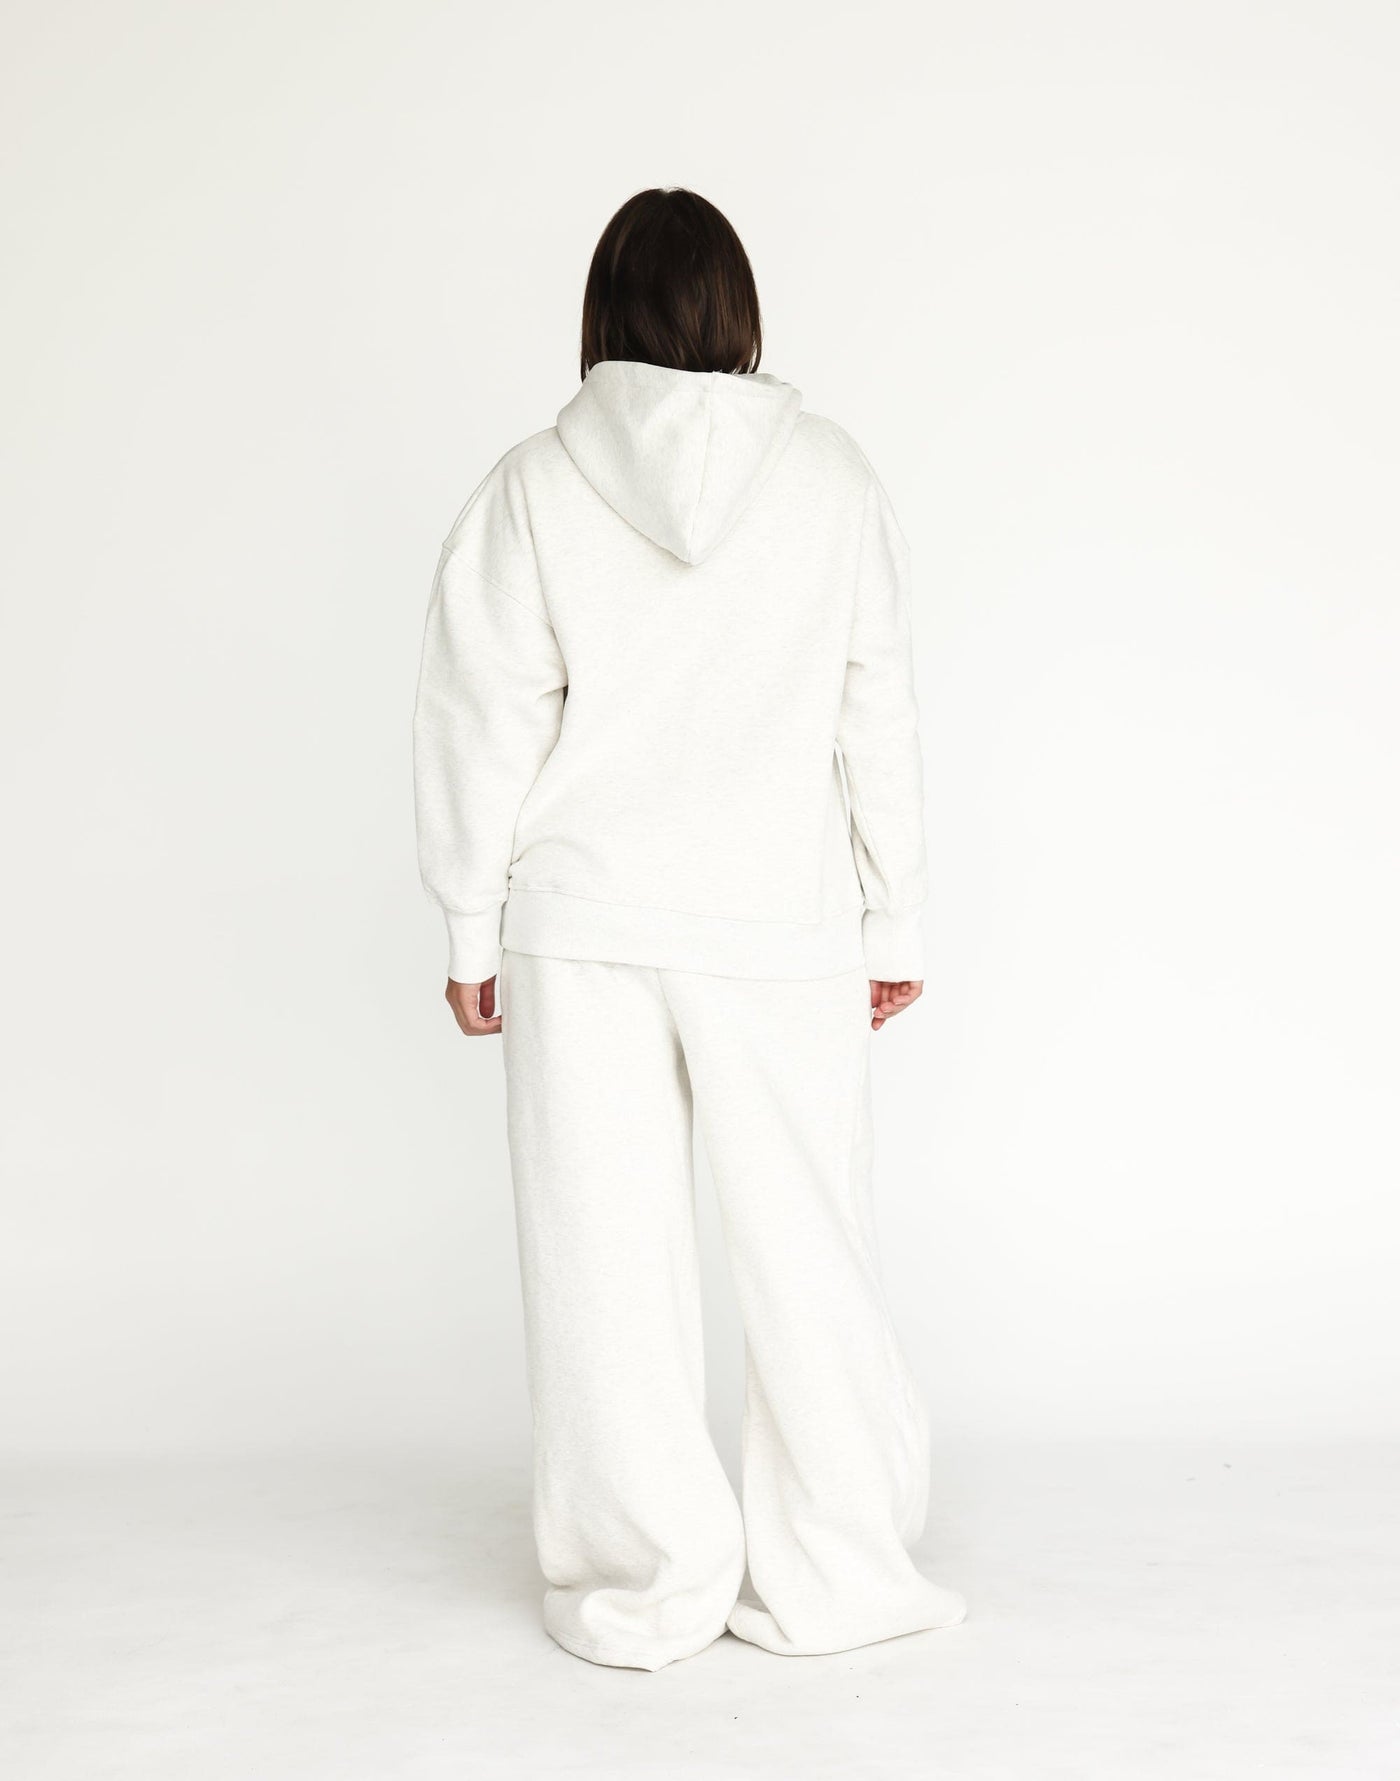 Noah Hoodie (Grey Marle) | CHARCOAL Exclusive - Oversized Dual Pocket Fleece Lined Hoodie - Women's Top - Charcoal Clothing